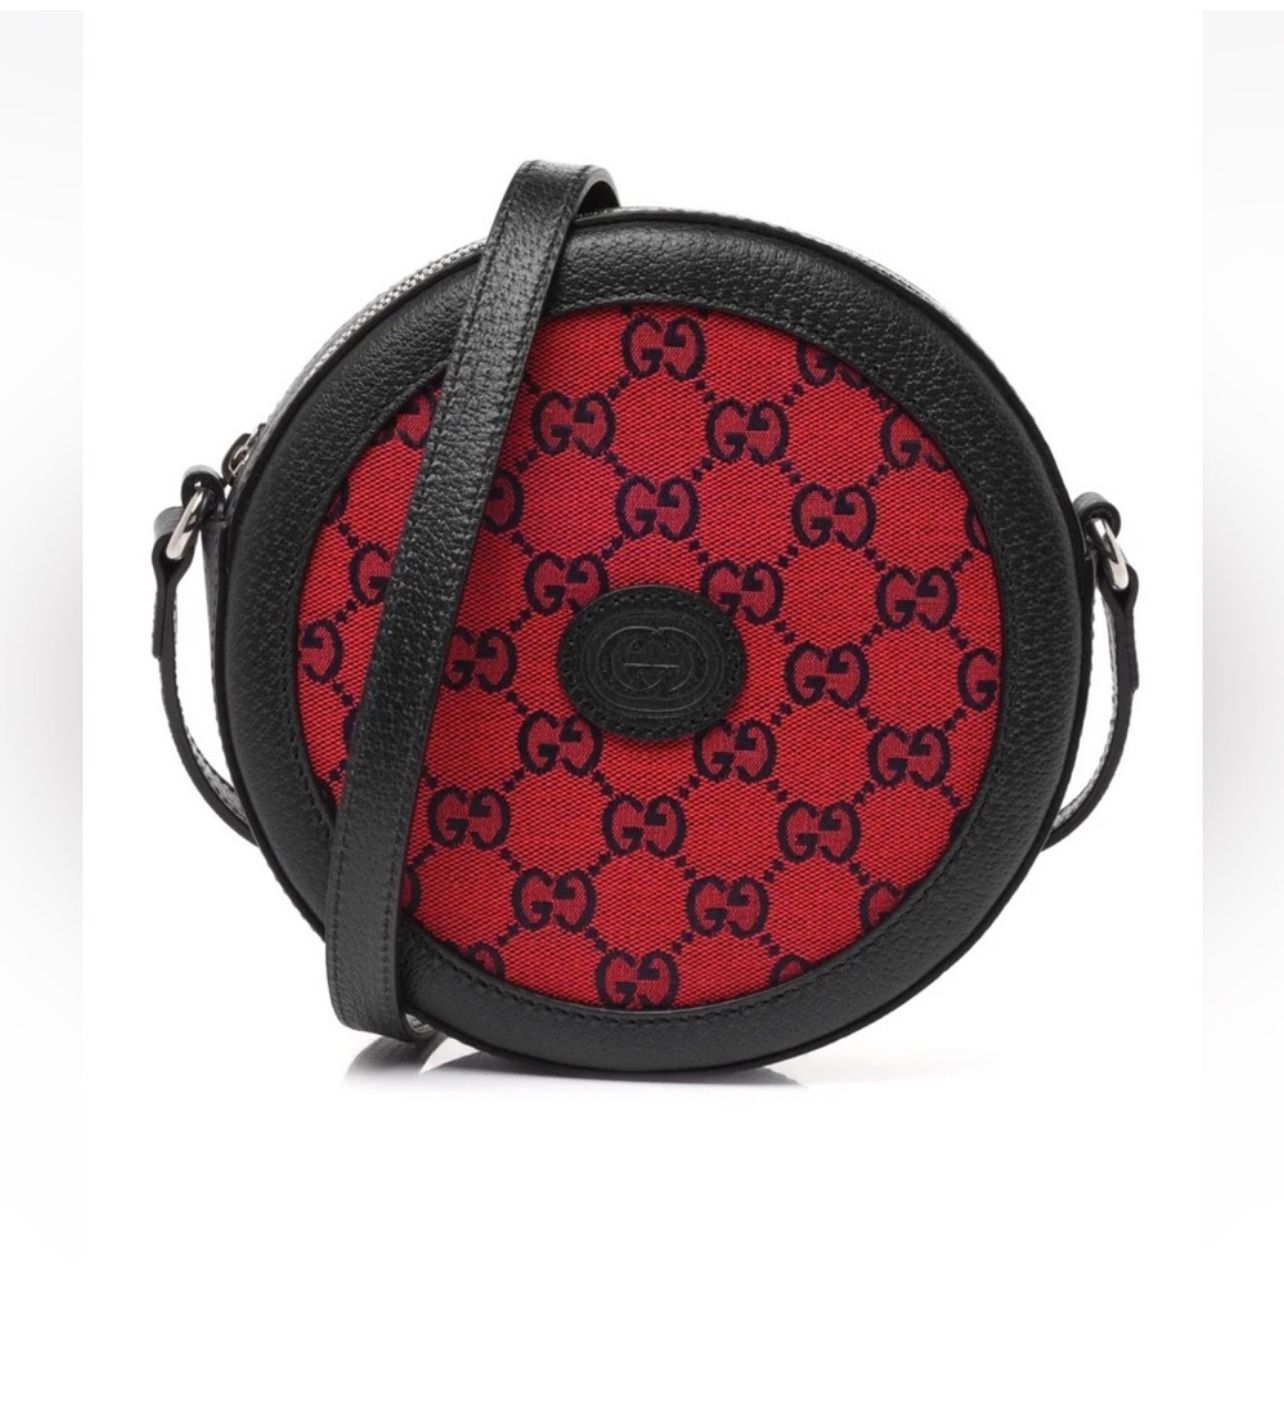 Gucci GG Supreme logo limited edition round crossbody bag